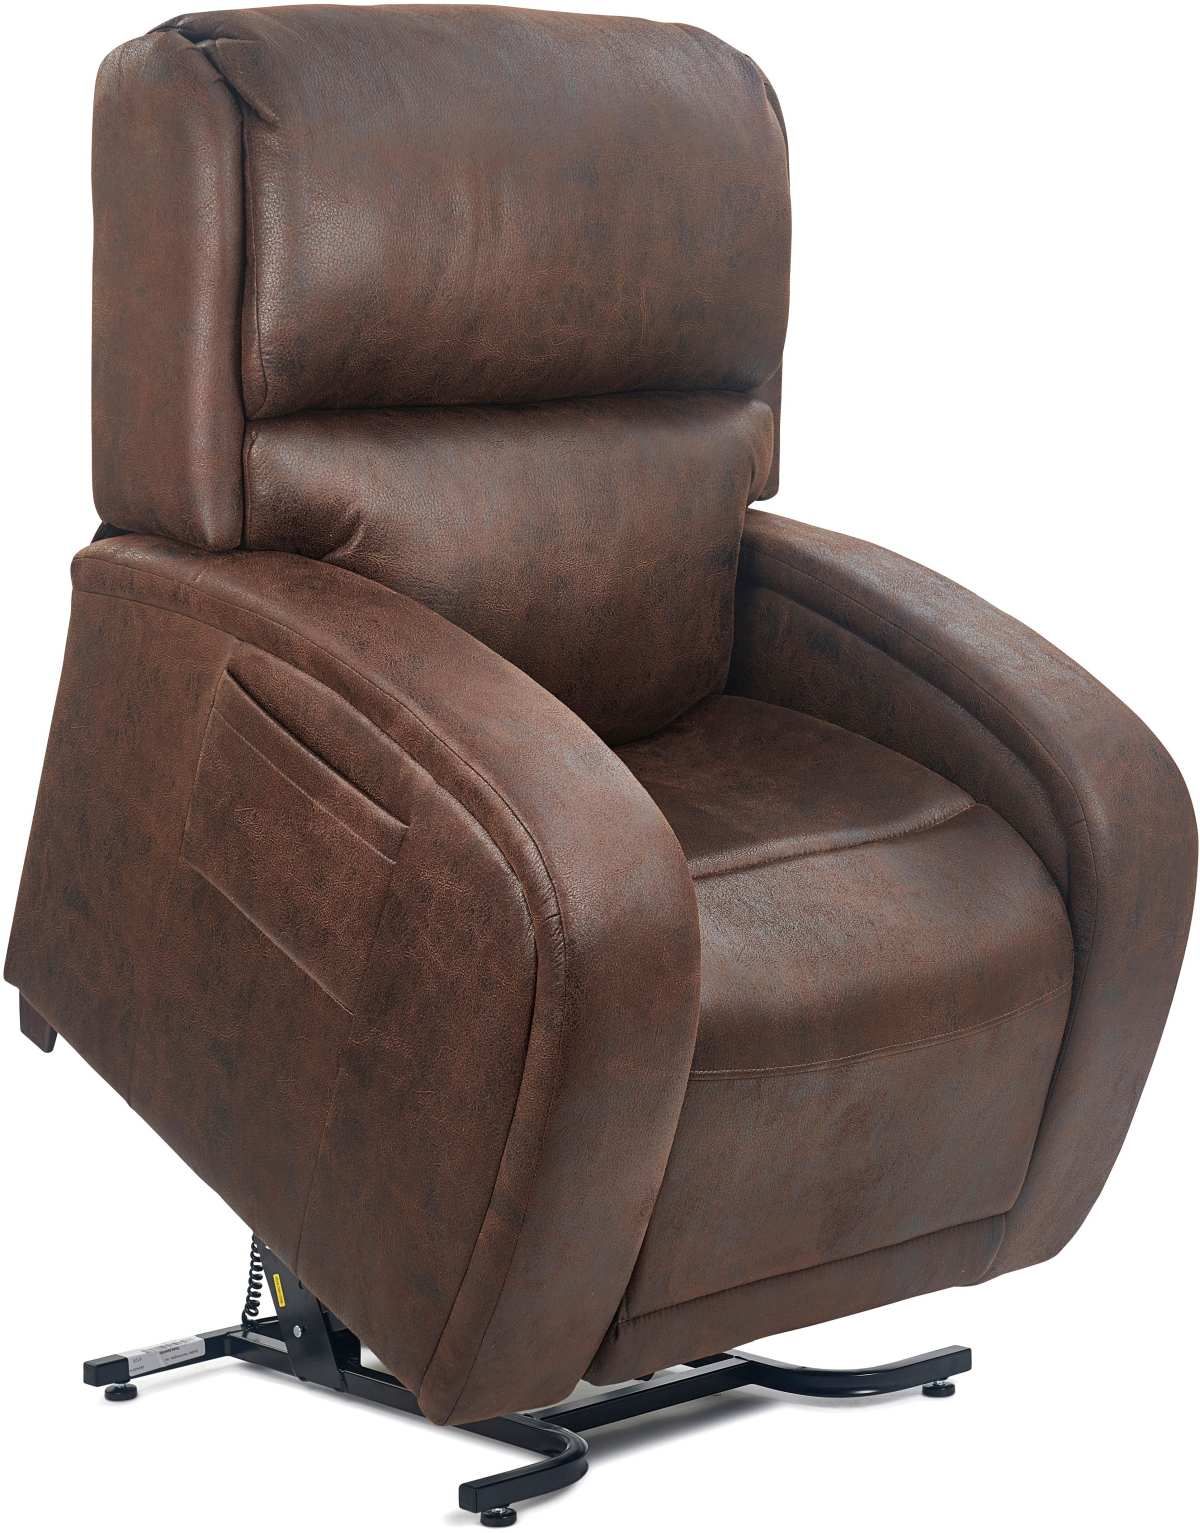 UltraComfort Living Room Sedona Lift Chair Recliner UC478